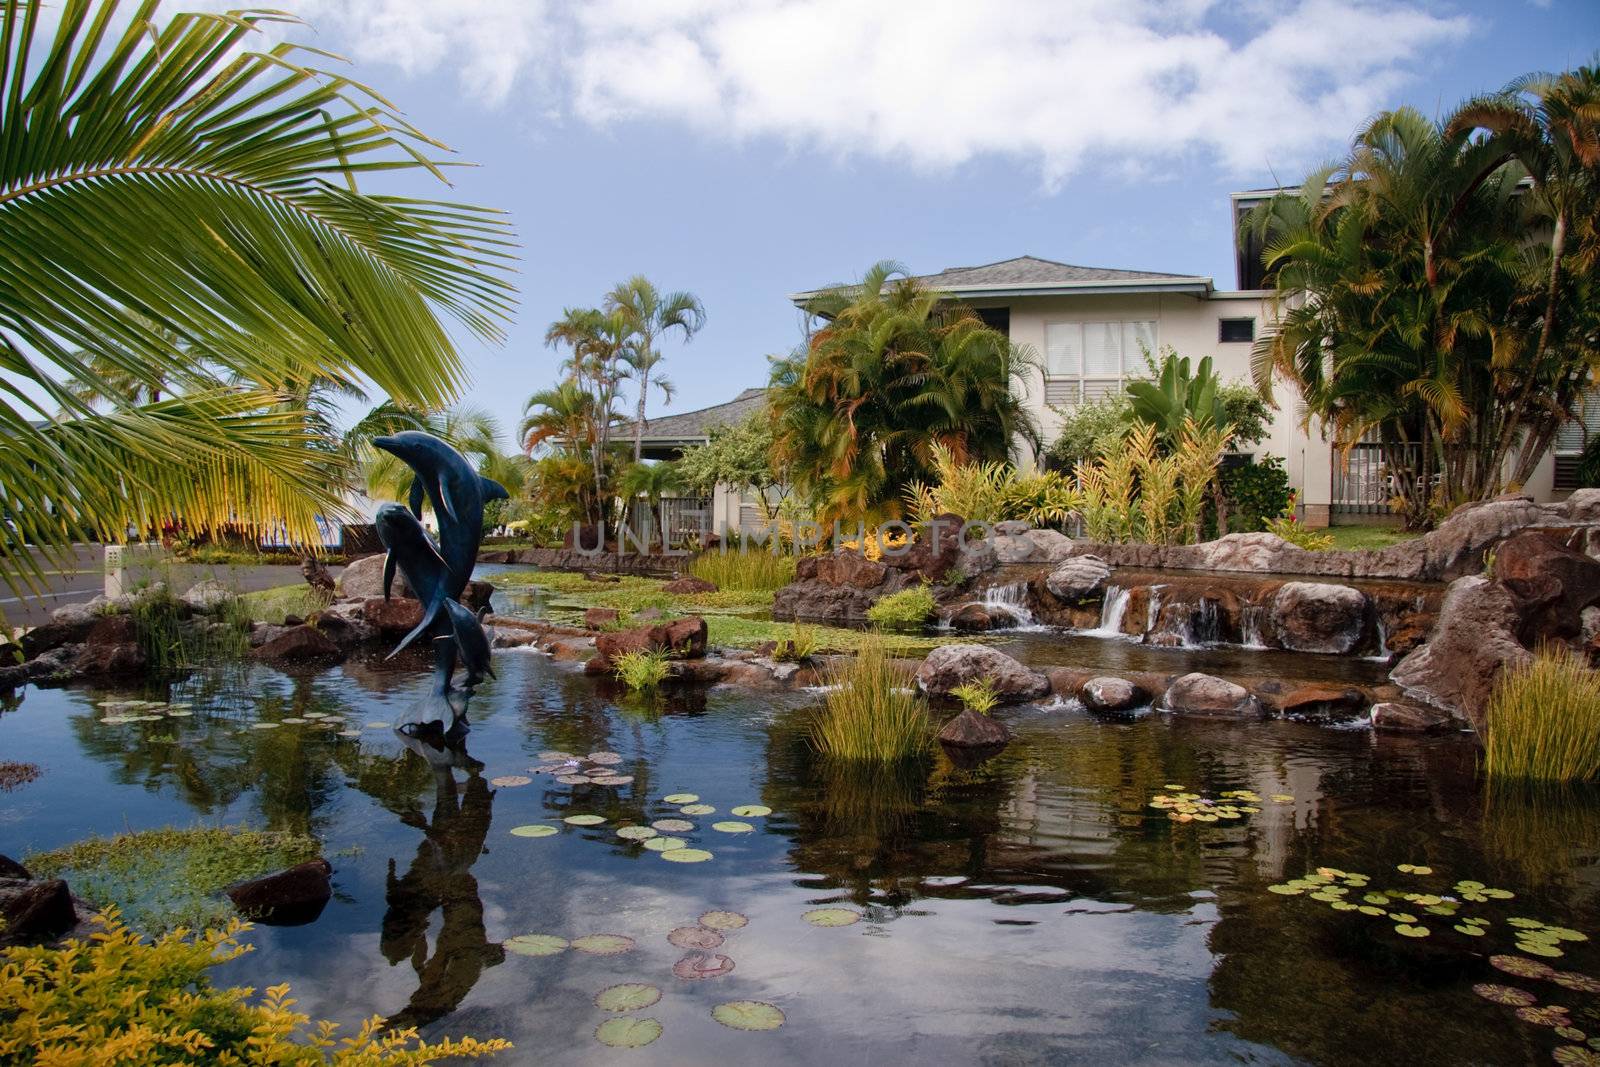 Vacation development in Kauai by steheap